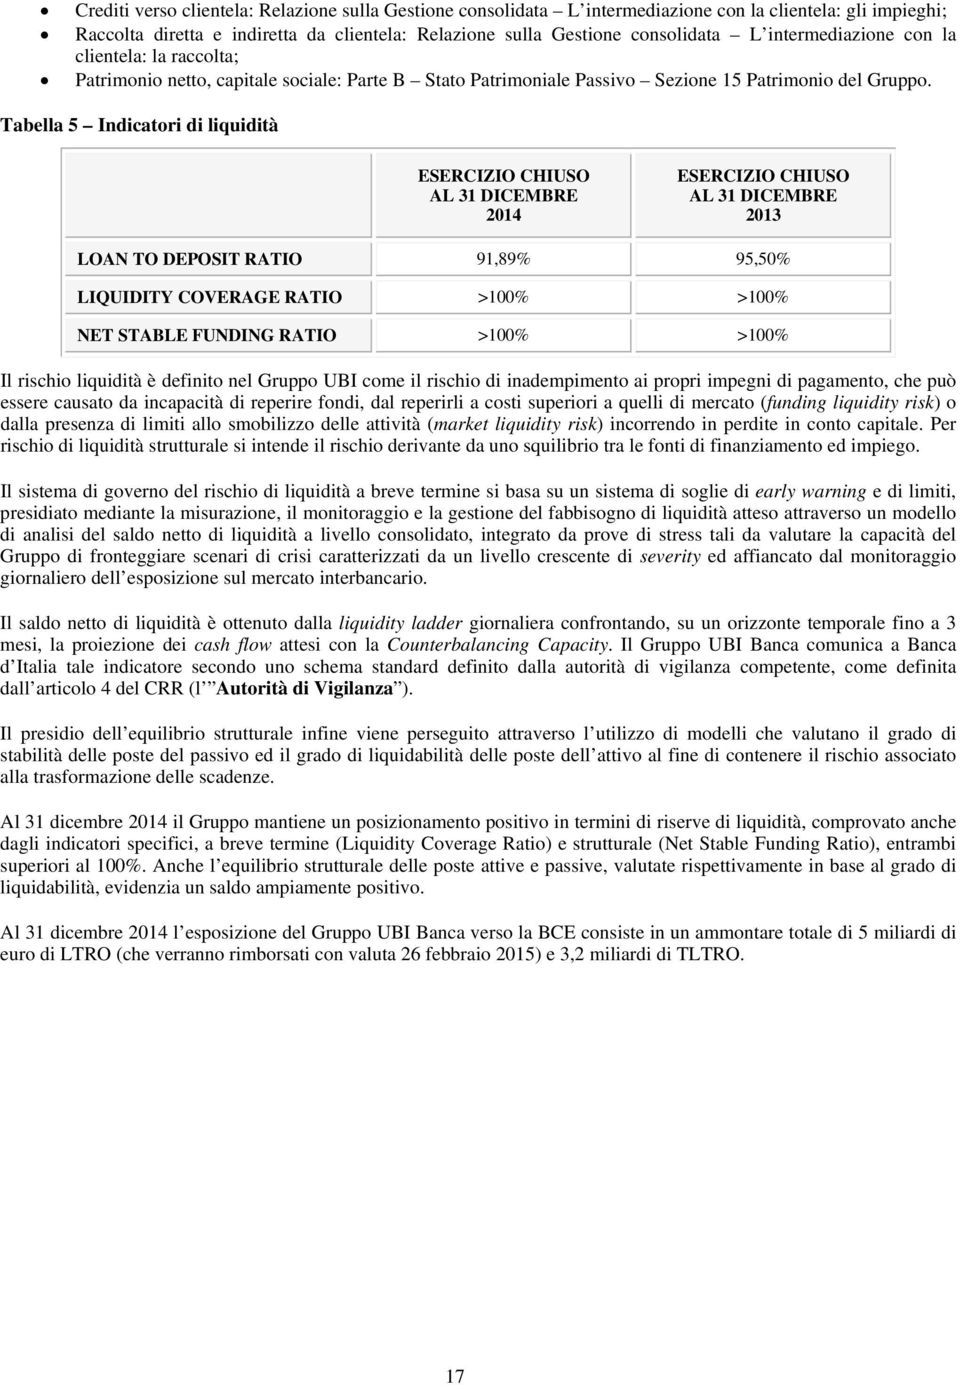 Tabella 5 Indicatori di liquidità ESERCIZIO CHIUSO AL 31 DICEMBRE 2014 ESERCIZIO CHIUSO AL 31 DICEMBRE 2013 LOAN TO DEPOSIT RATIO 91,89% 95,50% LIQUIDITY COVERAGE RATIO >100% >100% NET STABLE FUNDING